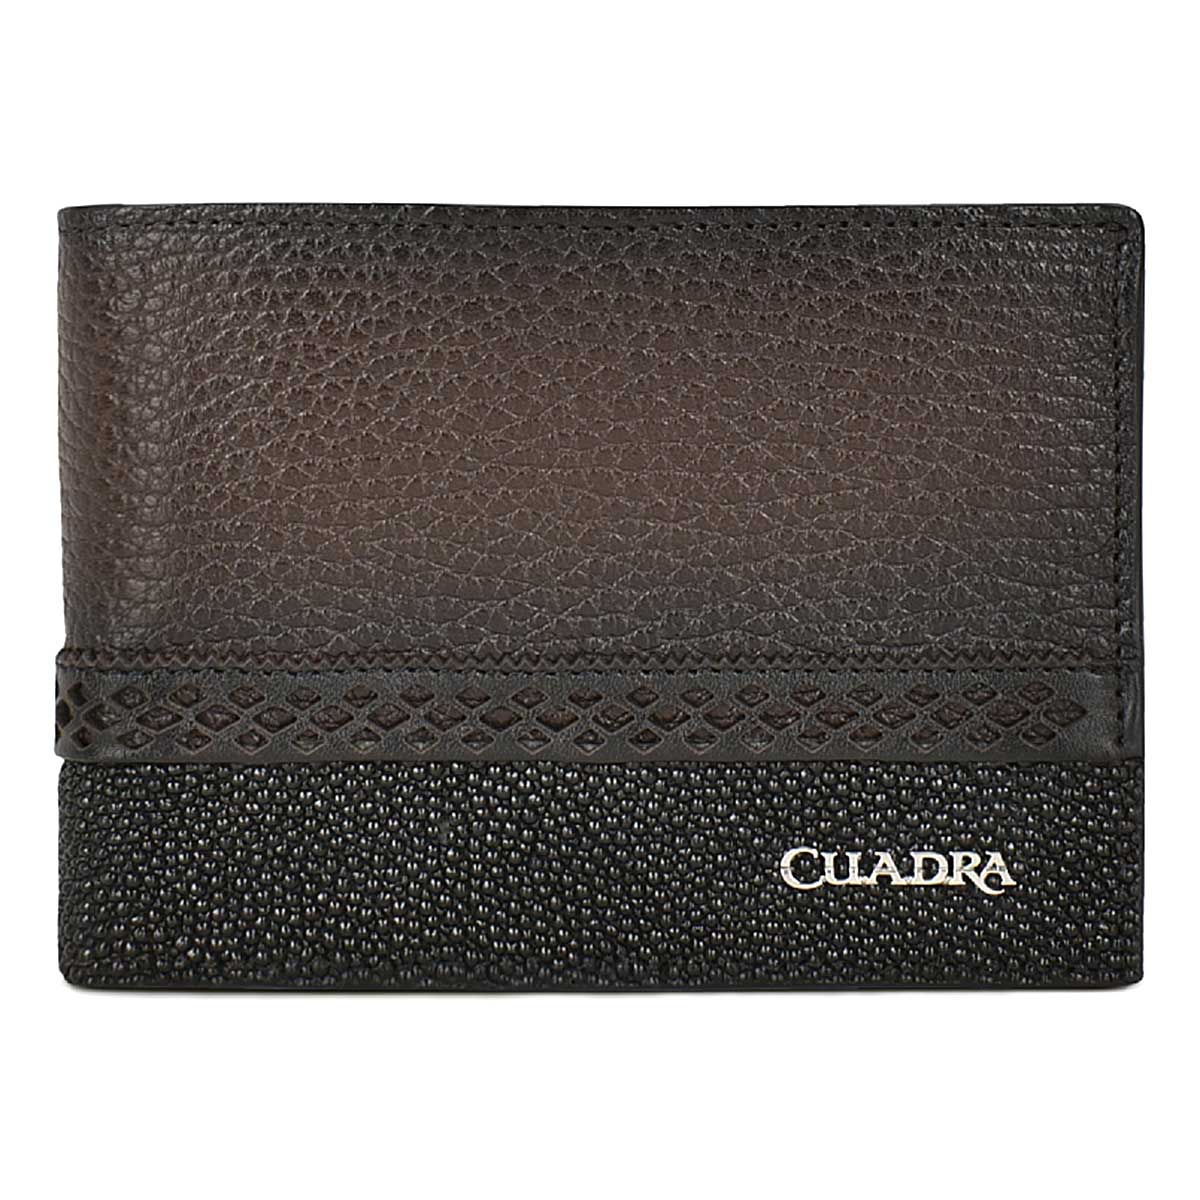 Handmade bi-tone stingray leather wallet